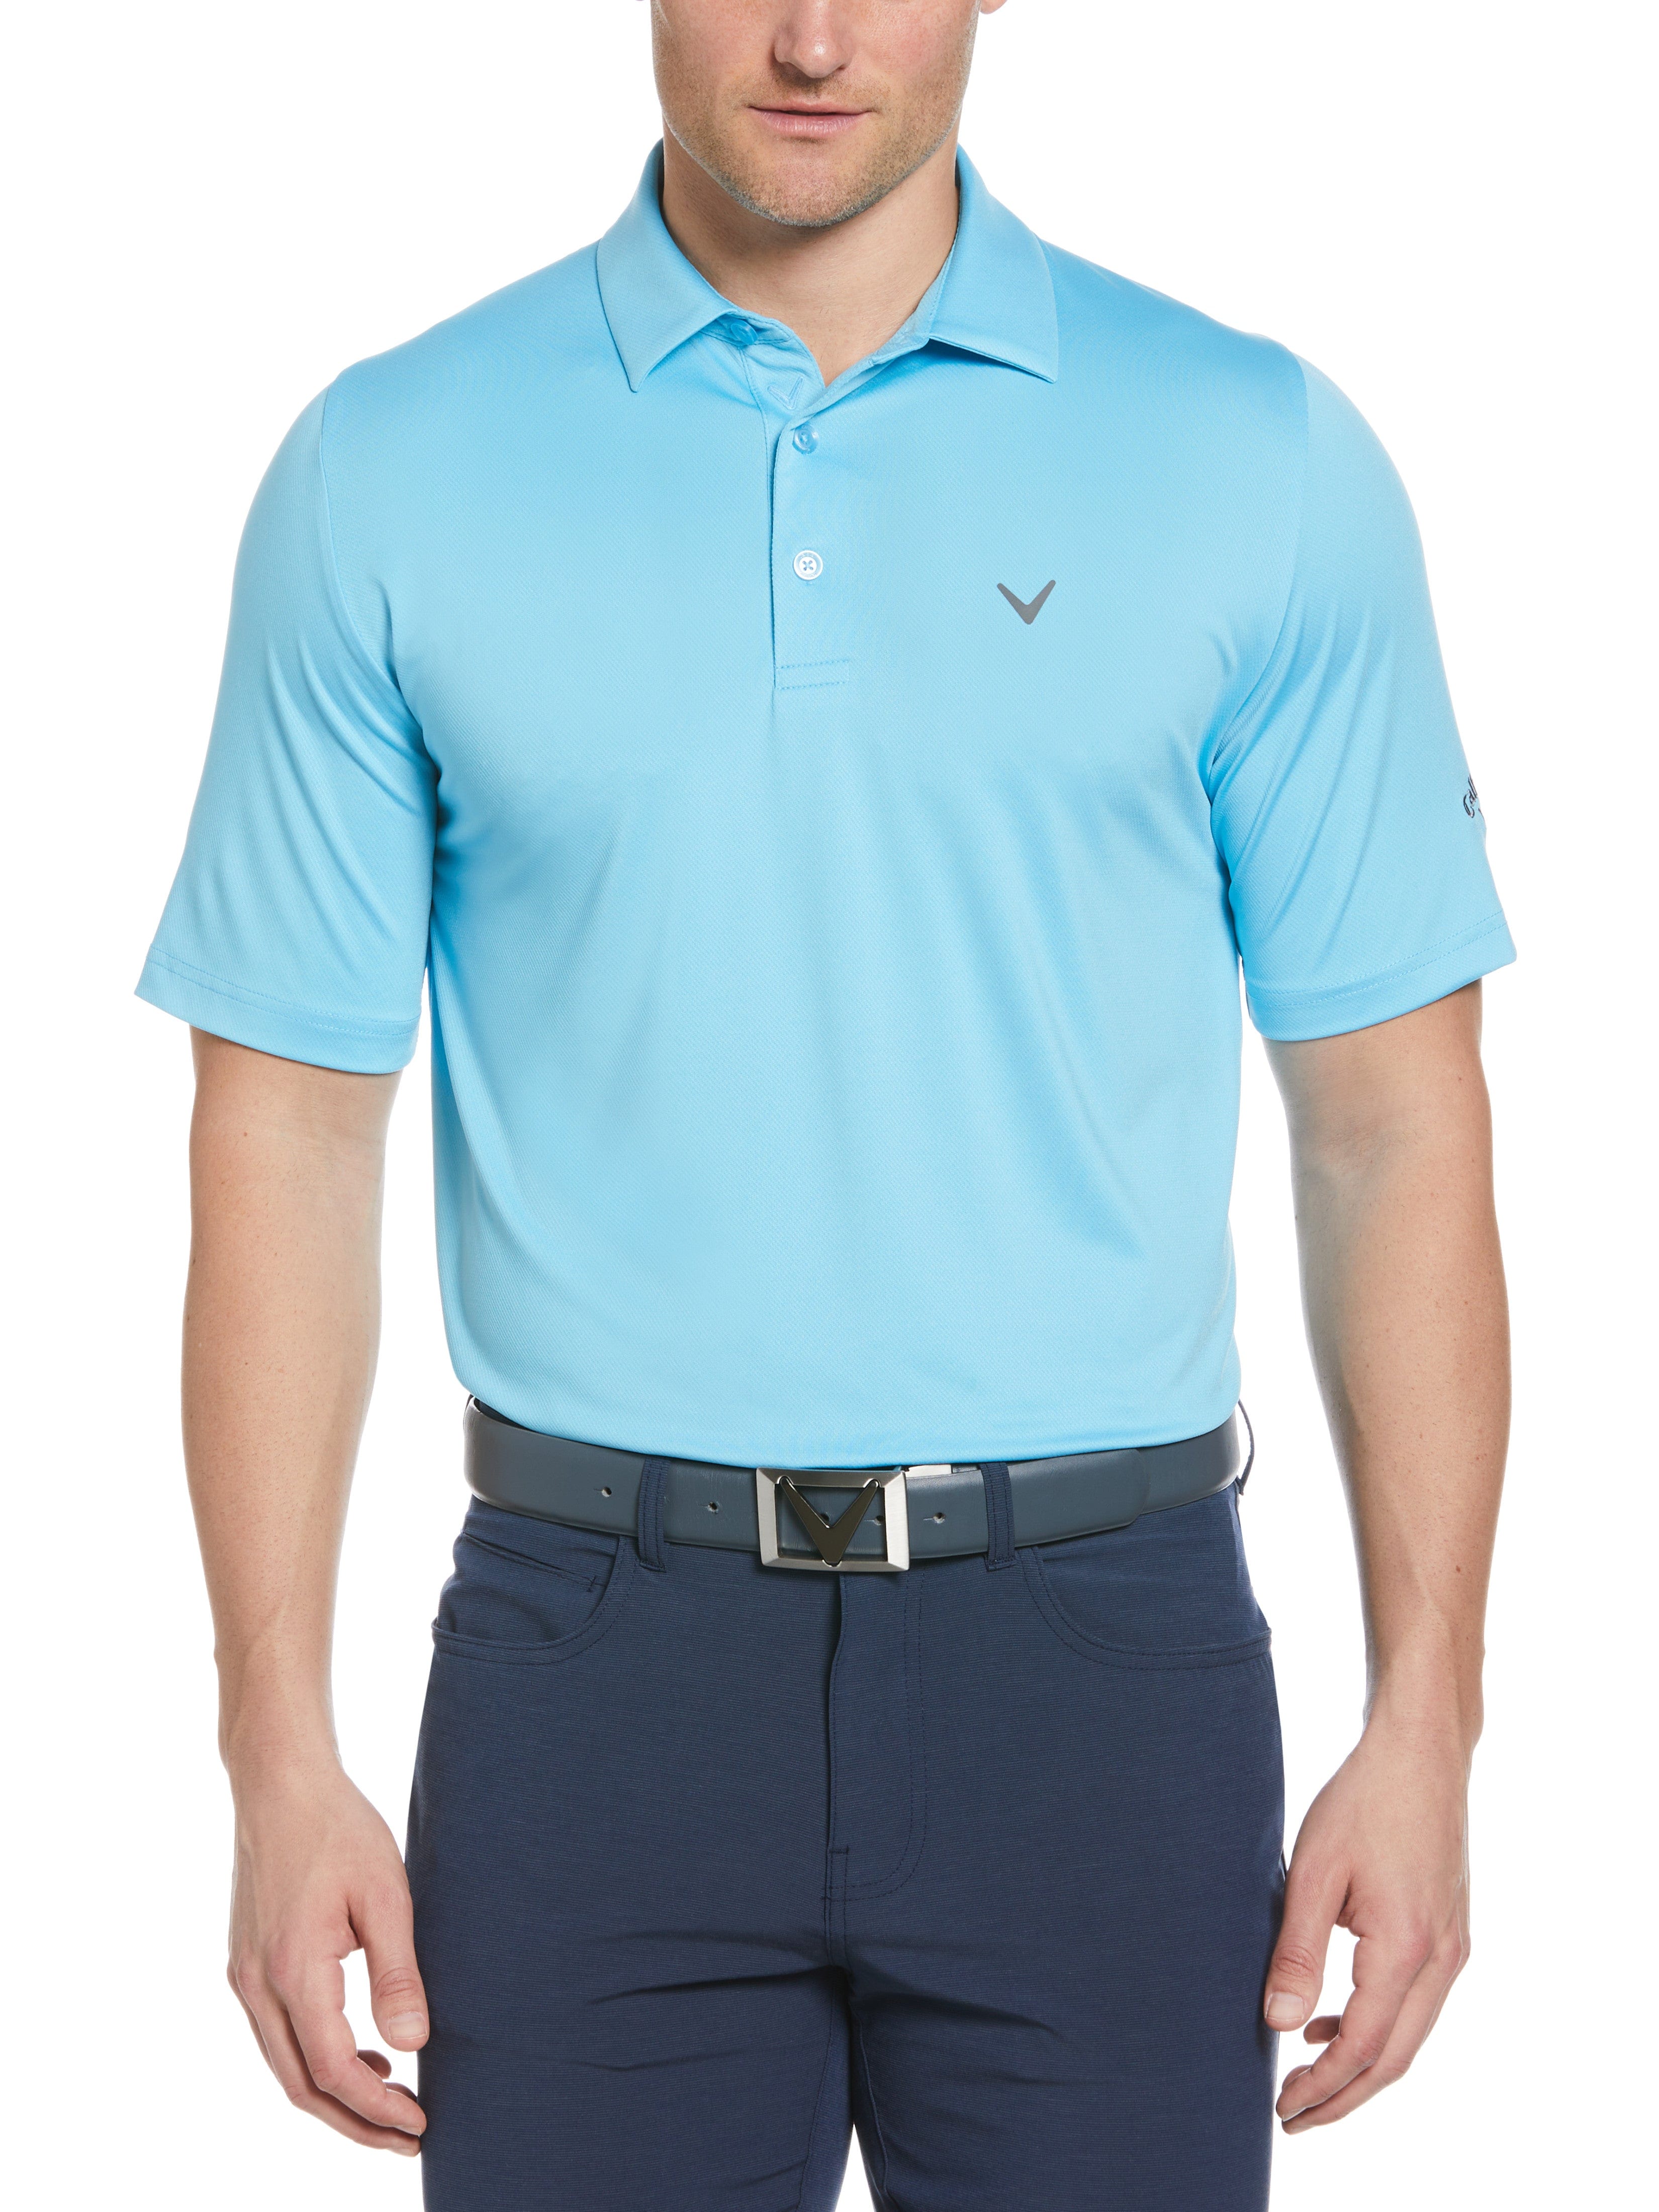 Mens Golf Polos, Golf Shirts For Men